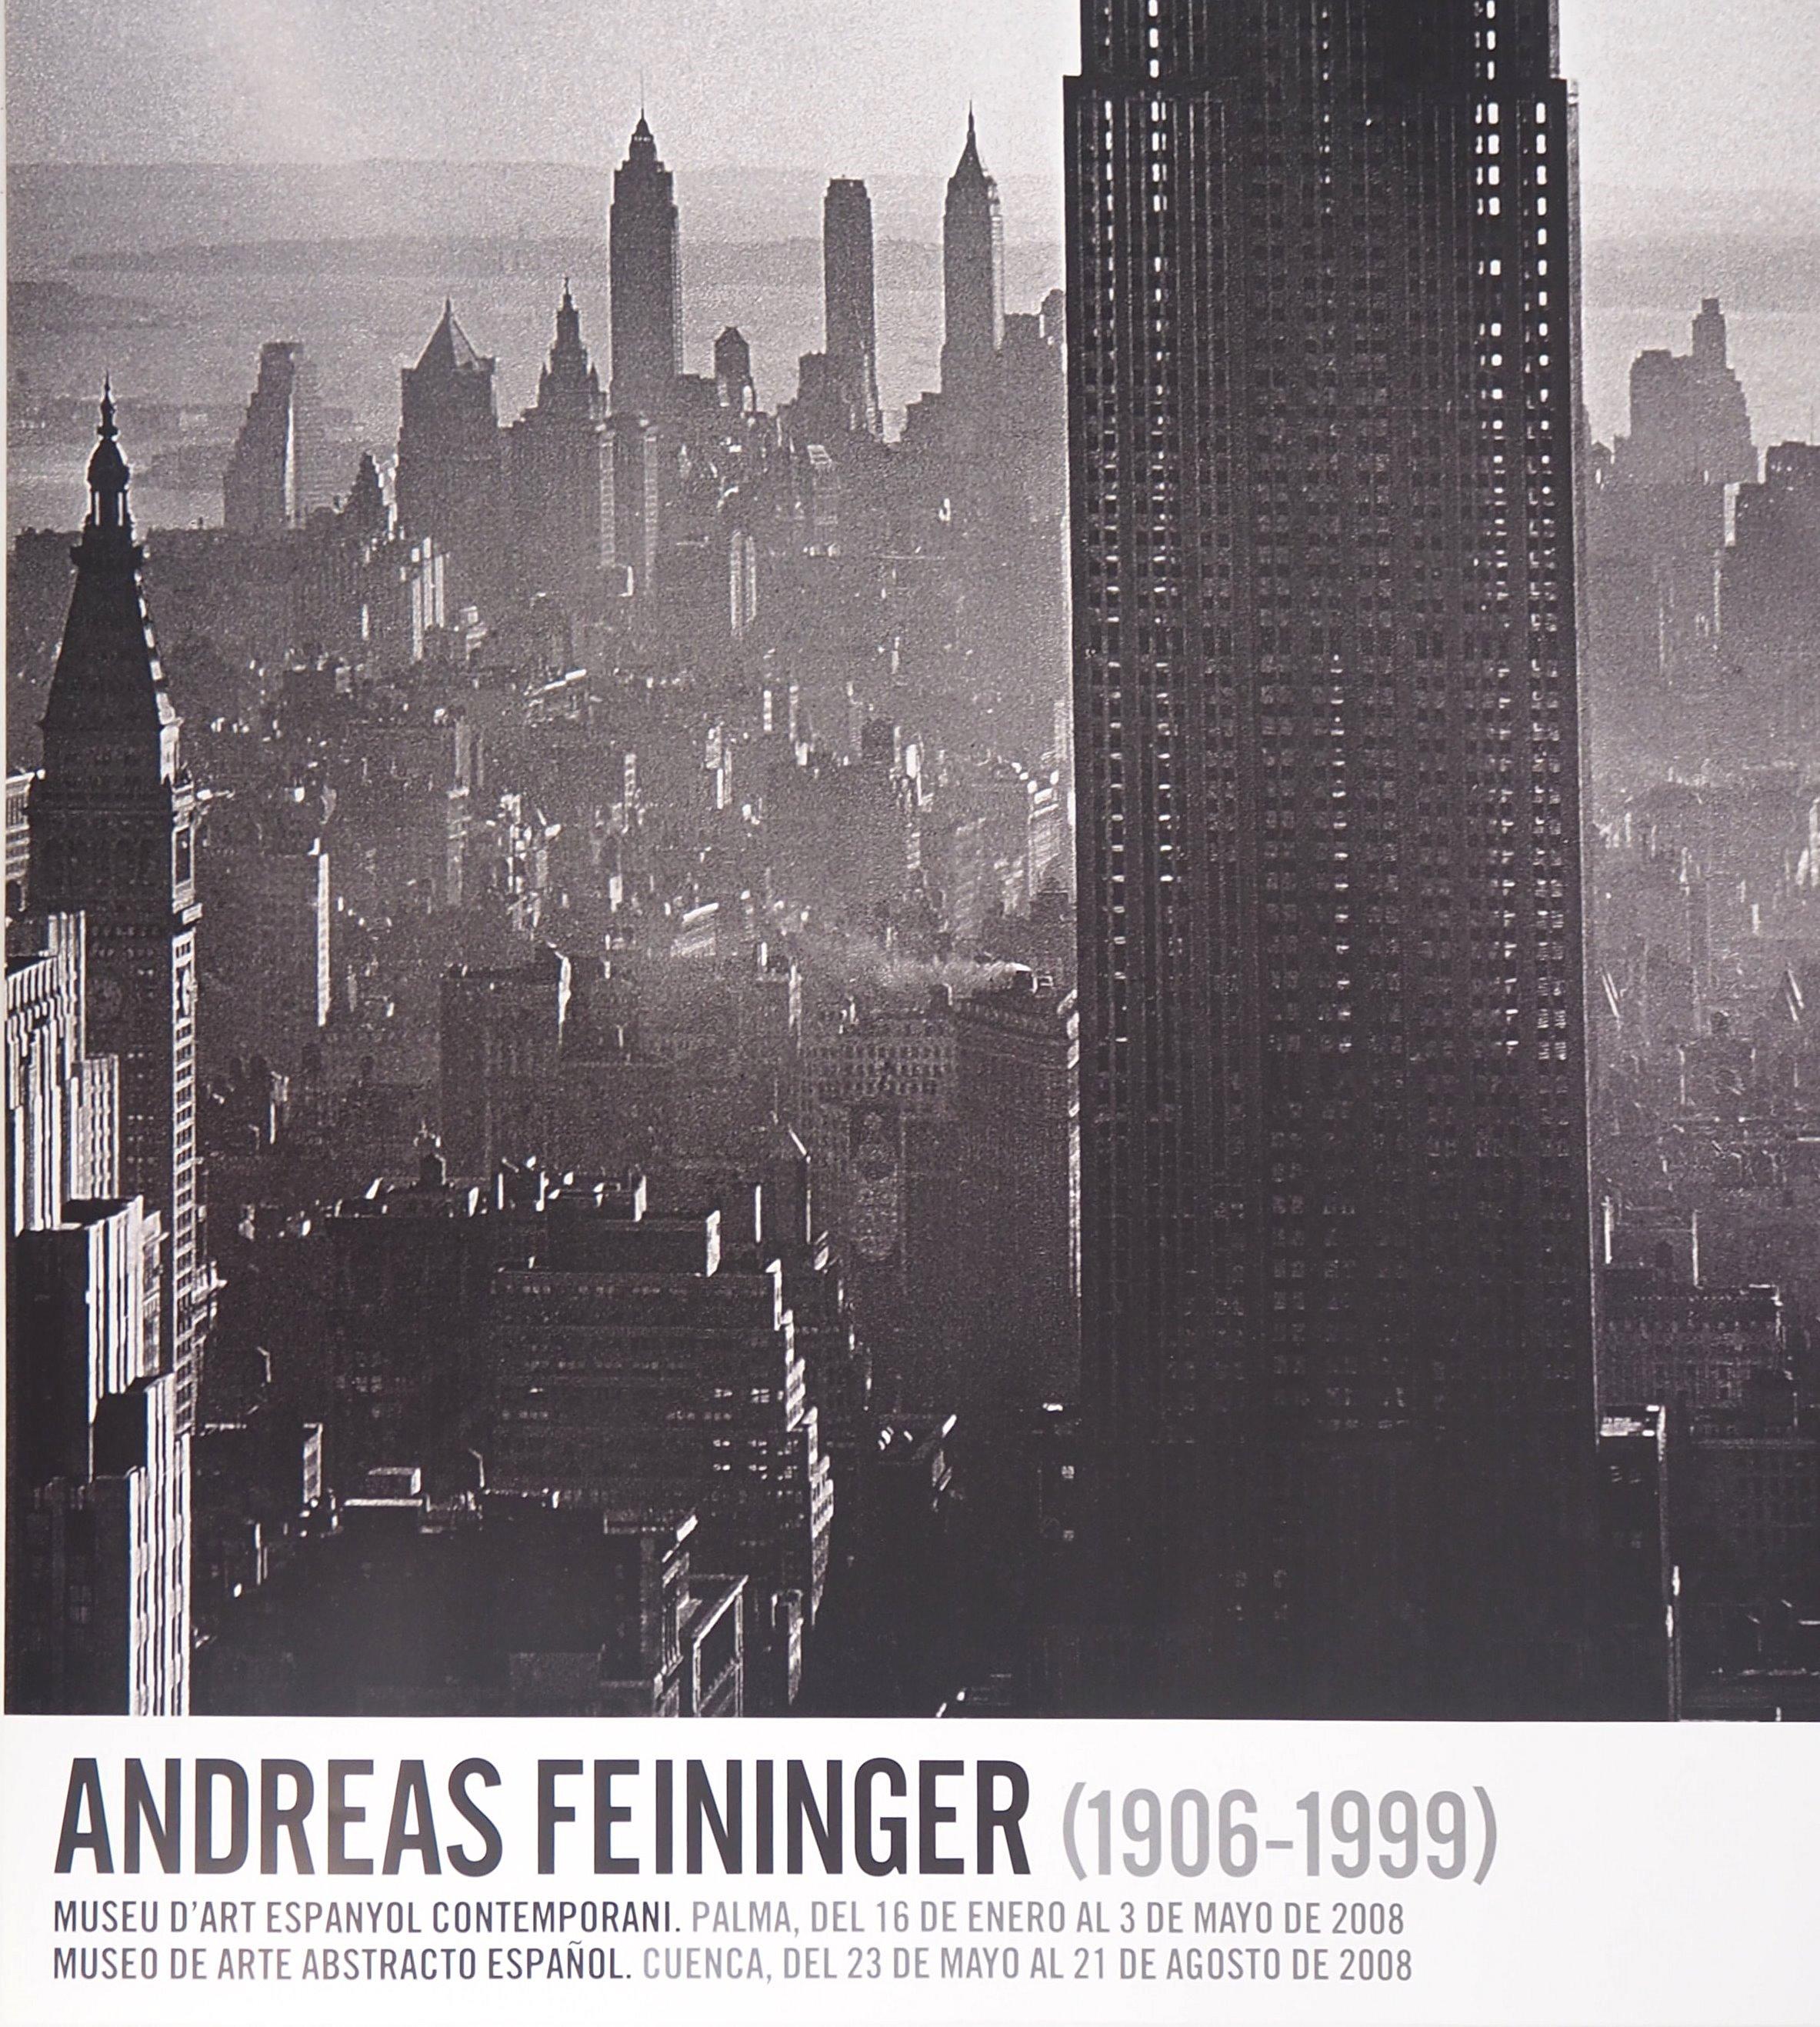 New York: Empire State Building - Quadrichromie Poster, 2008 - American Modern Print by Andreas Feininger